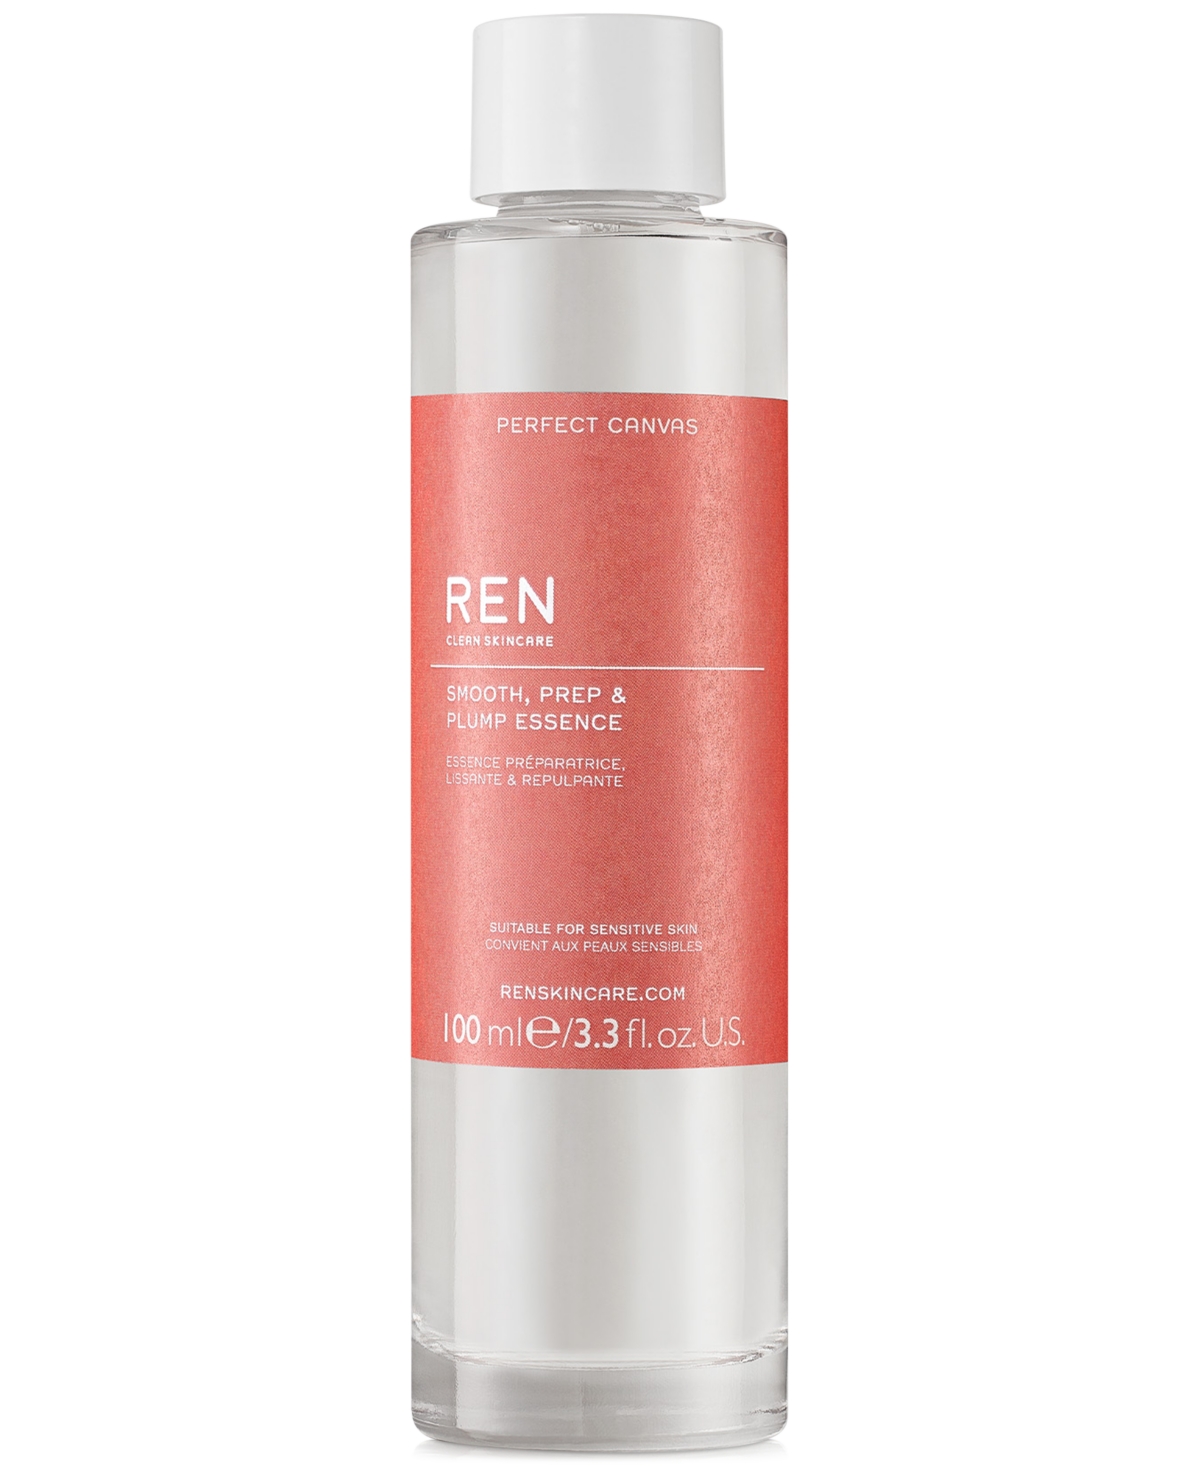 Ren Clean Skincare Perfect Canvas Smooth, Prep & Plump Essence 3.3 oz / 100 ml